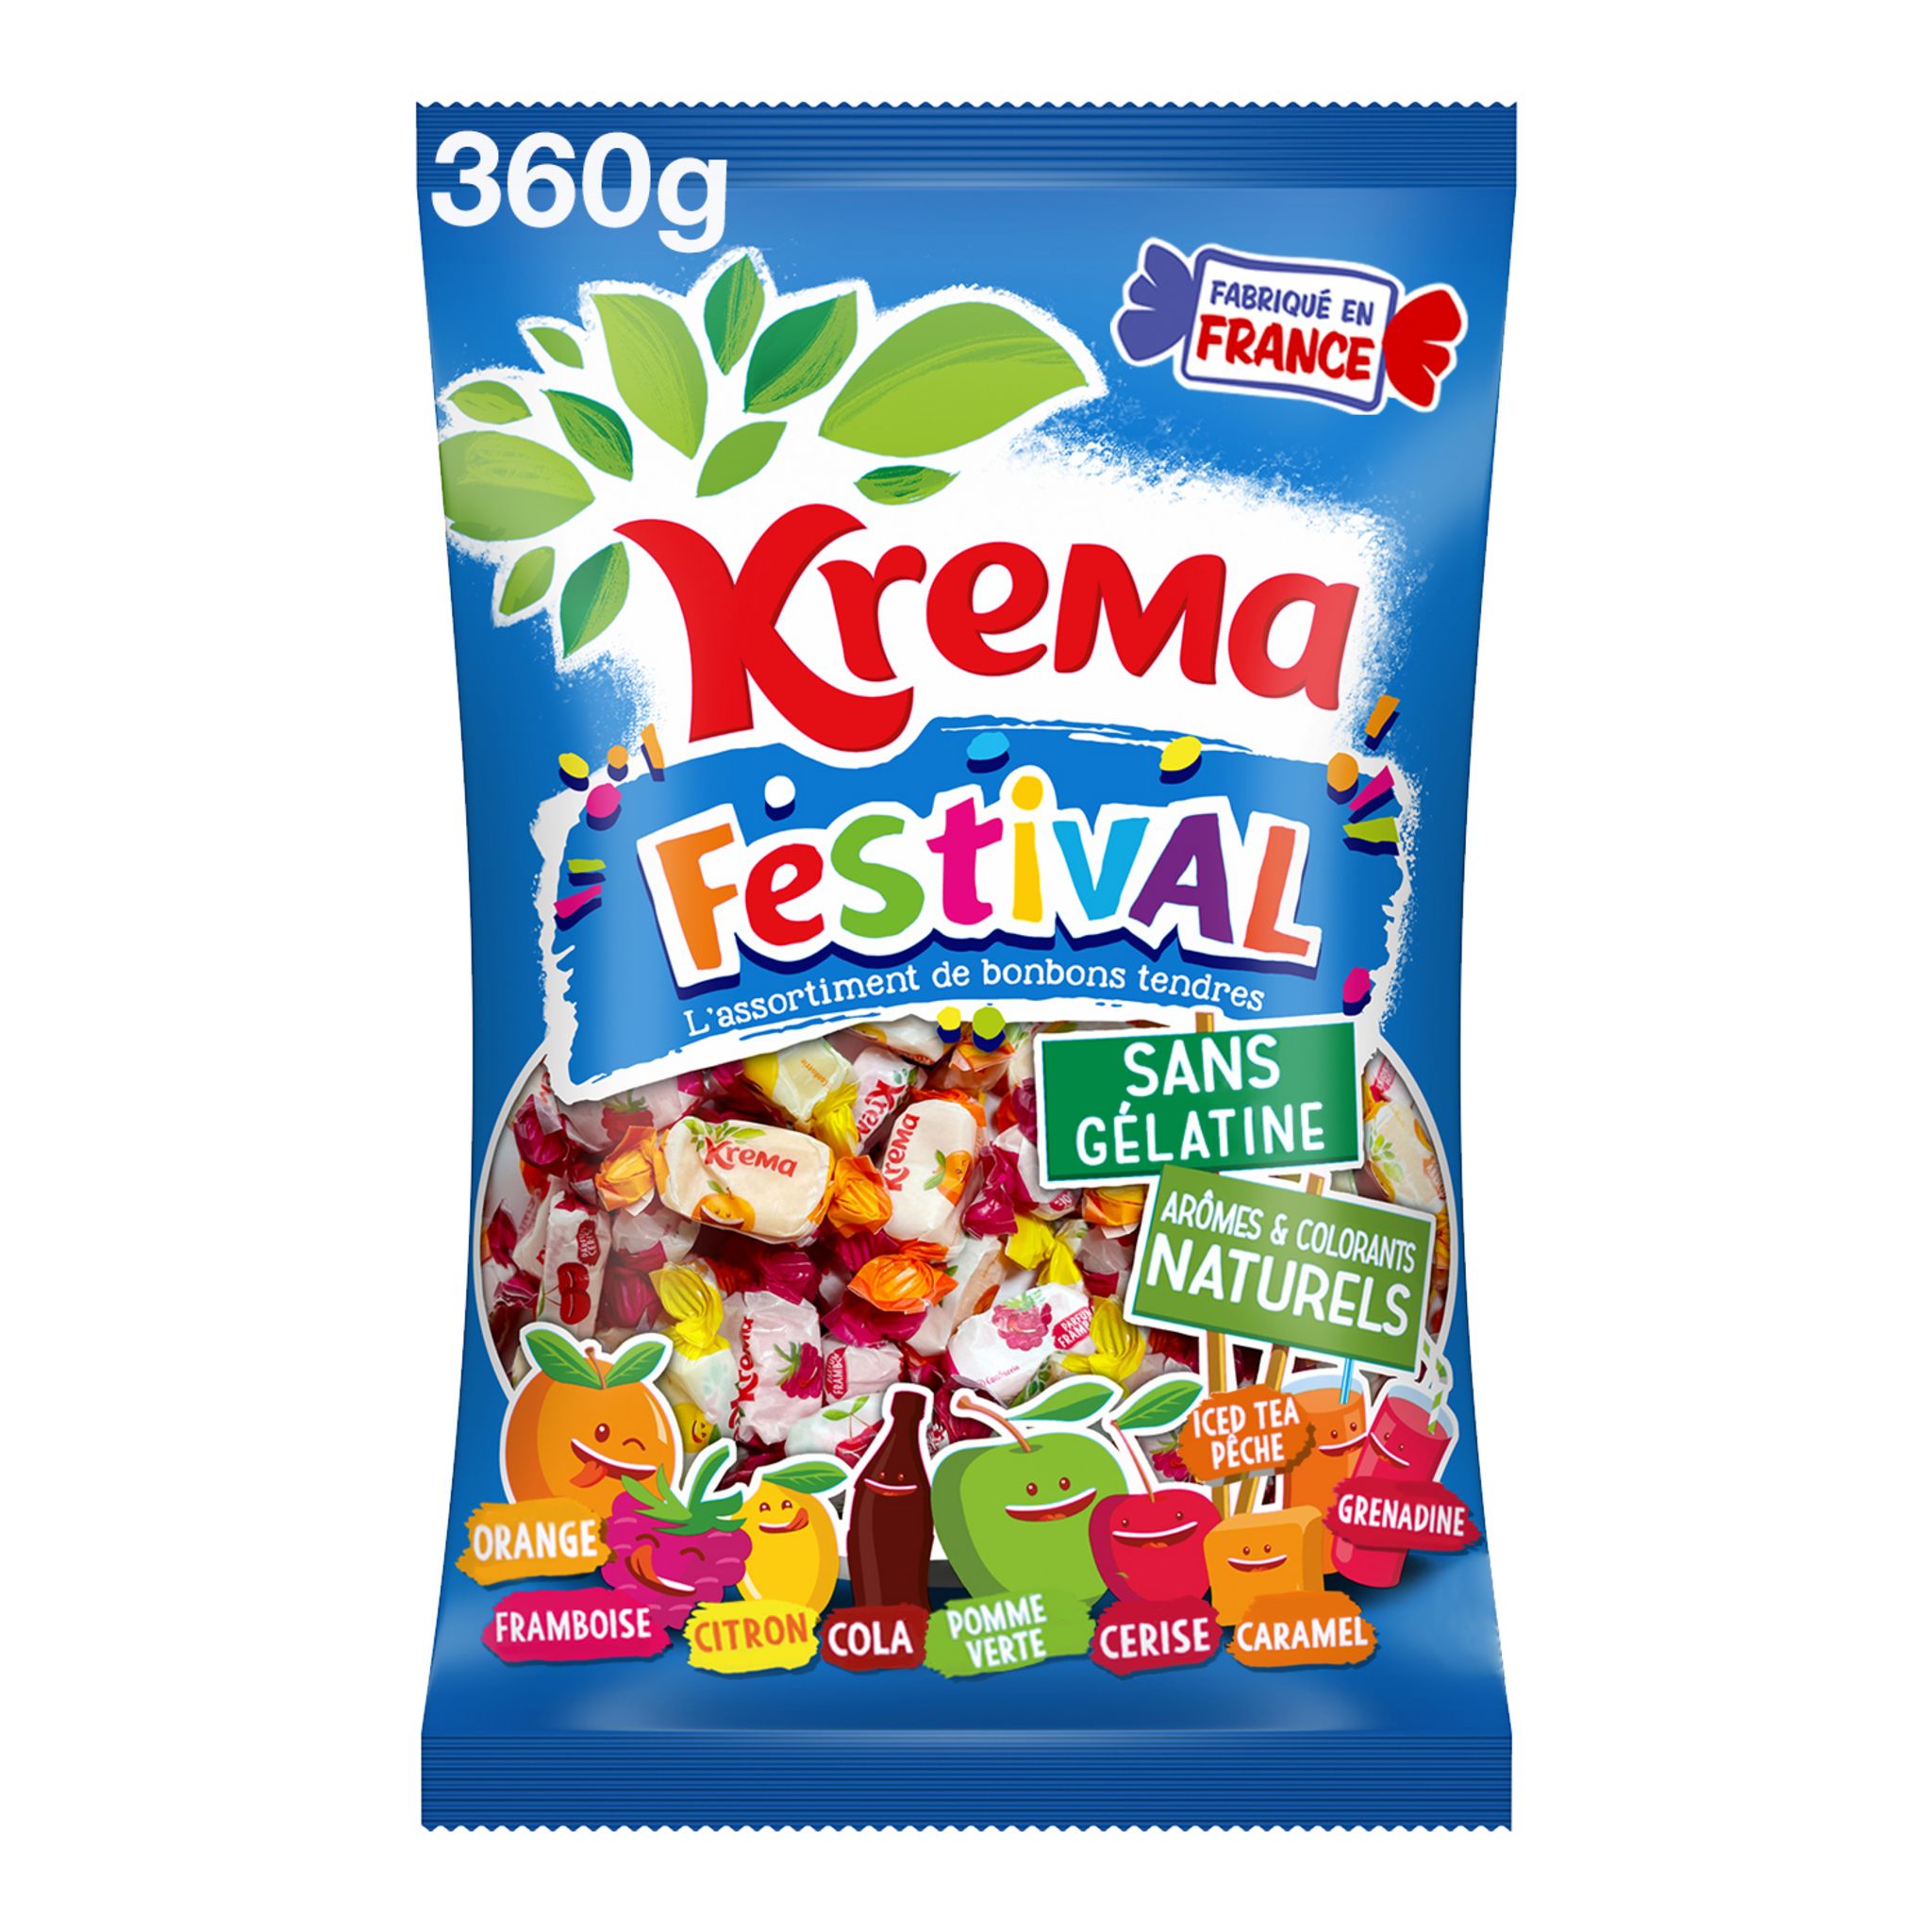 KREMA Festival assortiment de bonbons tendres 360g pas cher 